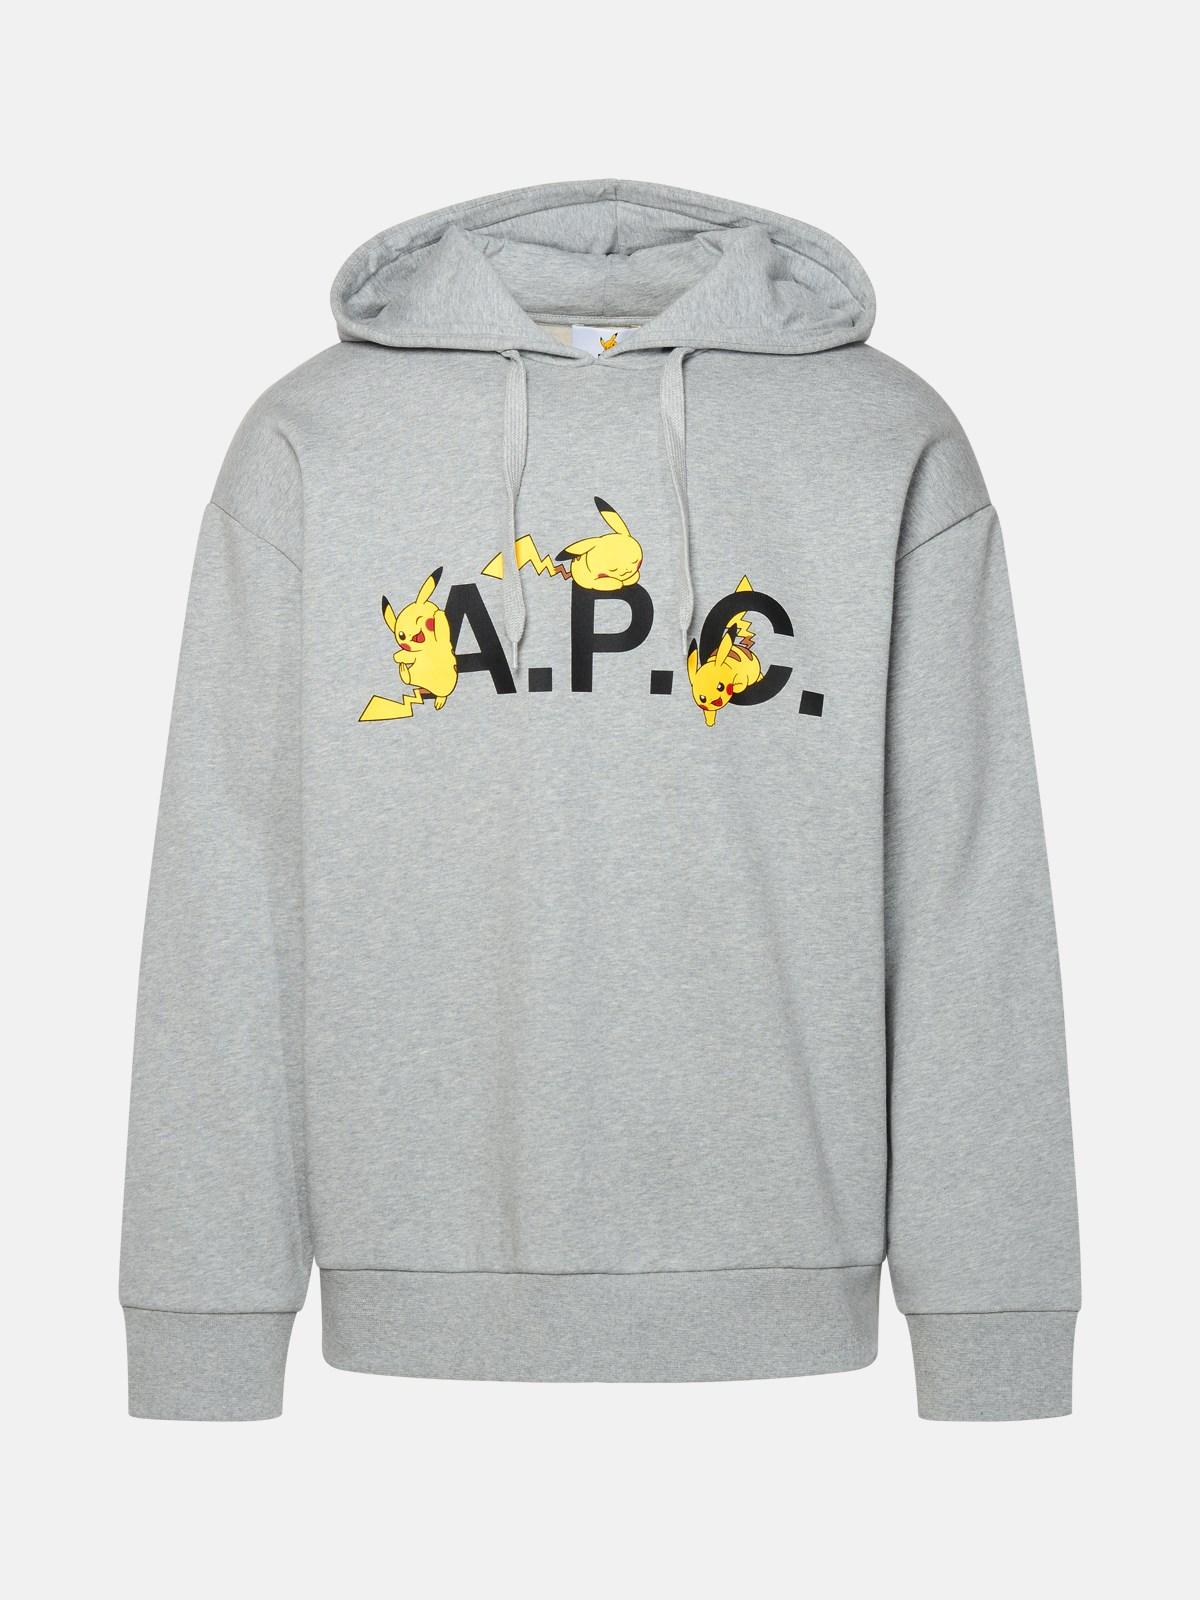 A.P.C. 'pokémon Pikachu' Cotton Sweatshirt in Gray for Men | Lyst